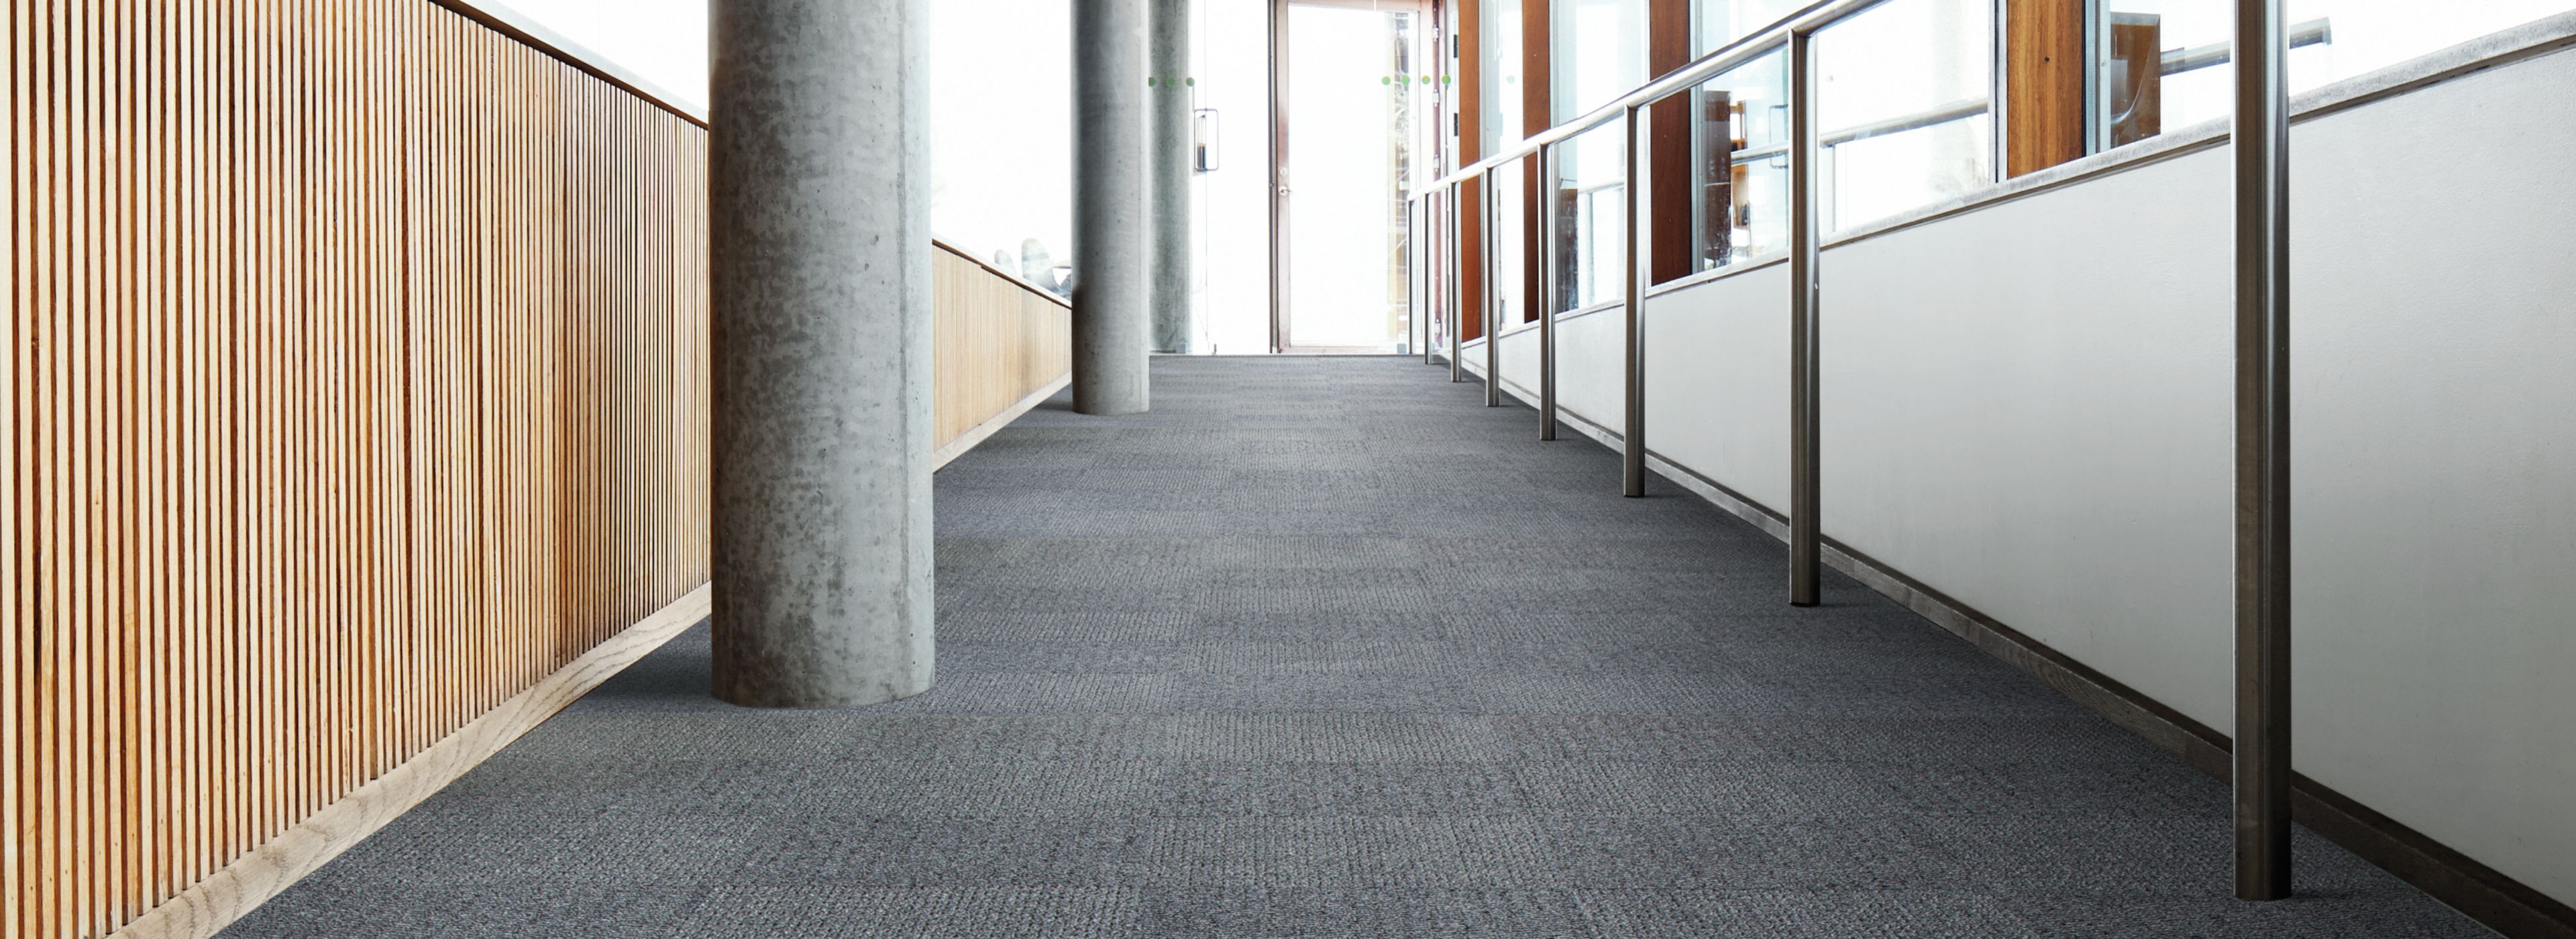 Interface SR799 carpet tile in a hallway setting with columns imagen número 1